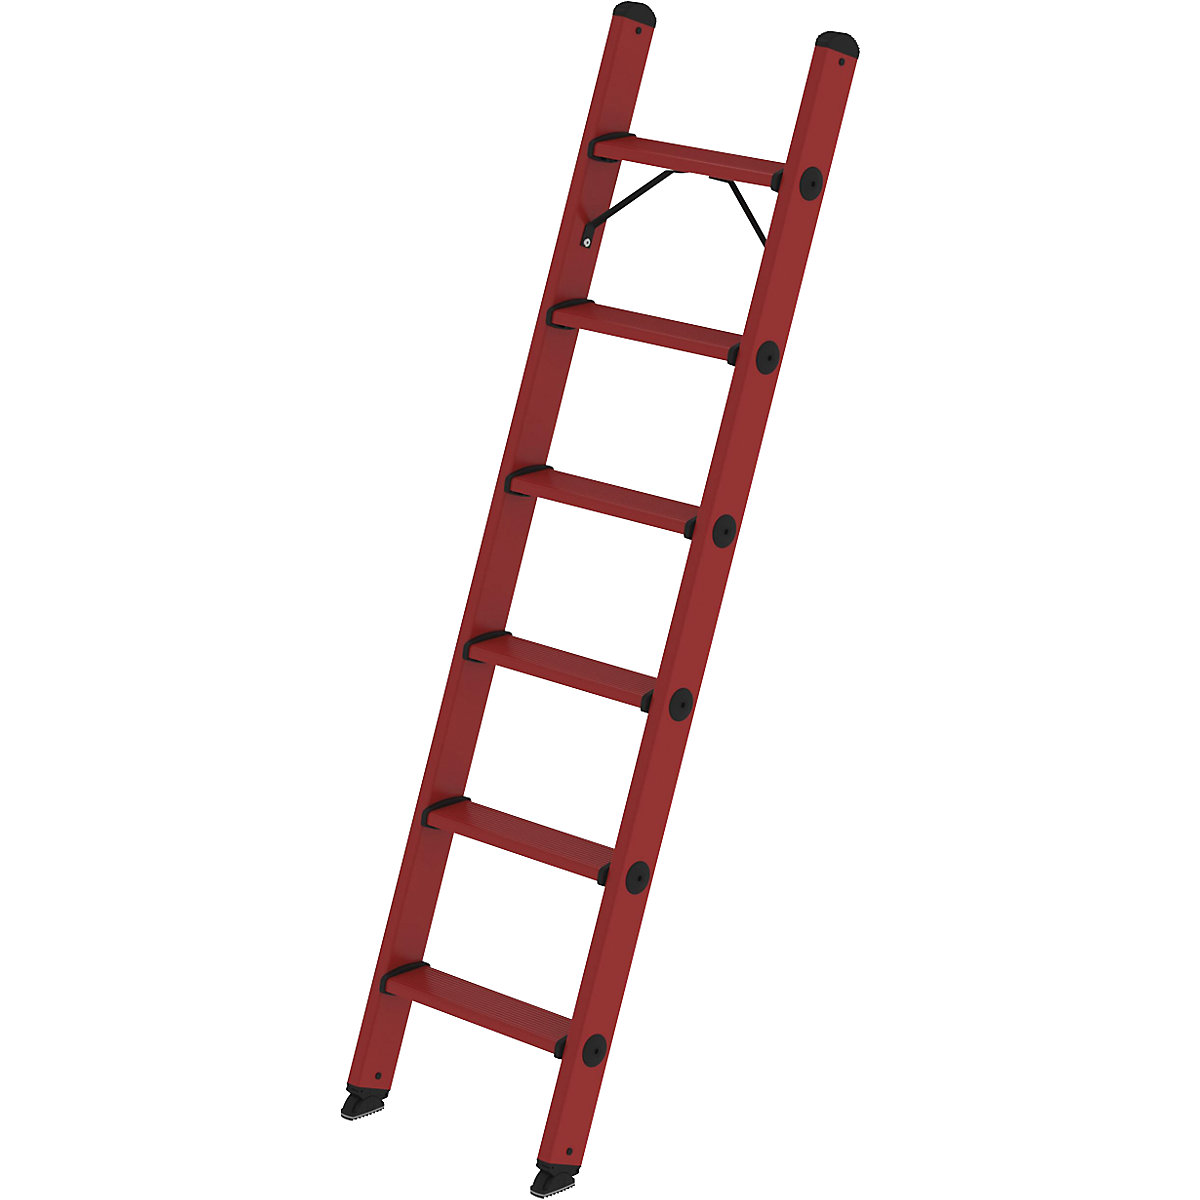 GRP lean-to step ladder - MUNK